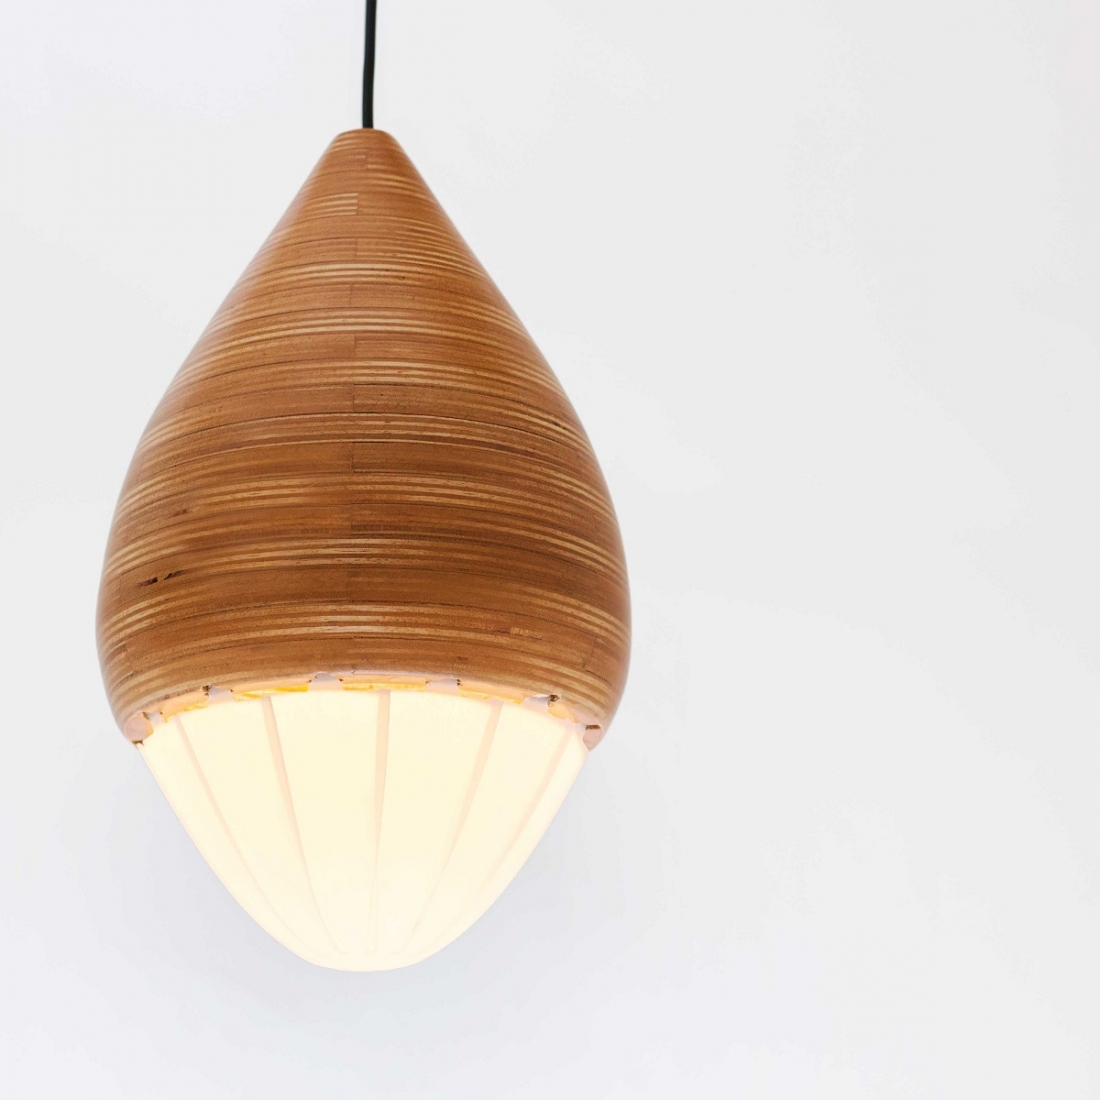 Hive Plywood Multifunctional Lamp Globe 